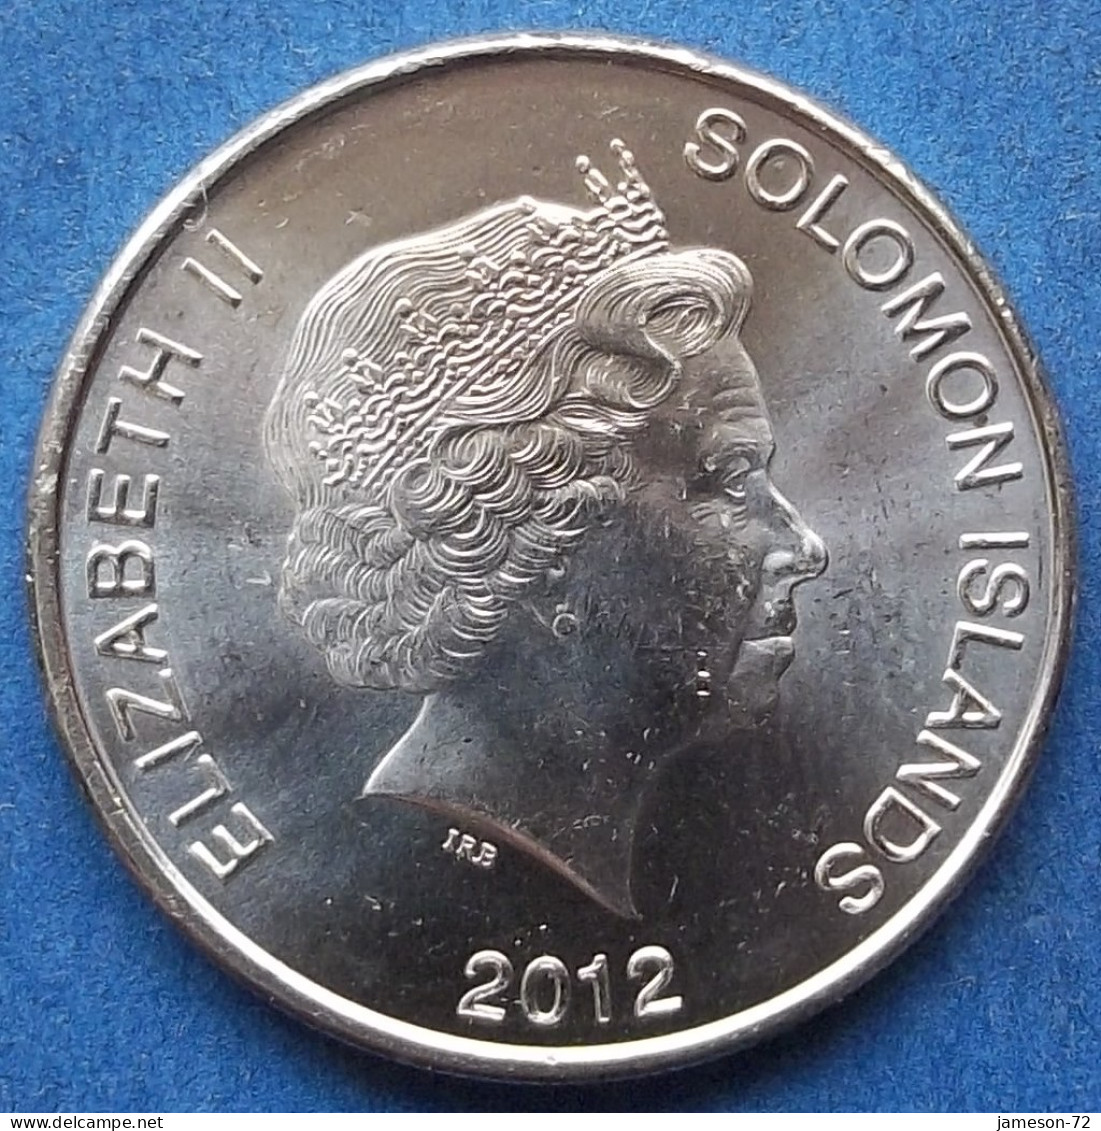 SOLOMON ISLANDS - 50 Censt 2012 "Eagle Spirit" KM# 237 Commonwealth Nation, Elizabeth II - Edelweiss Coins - Islas Salomón